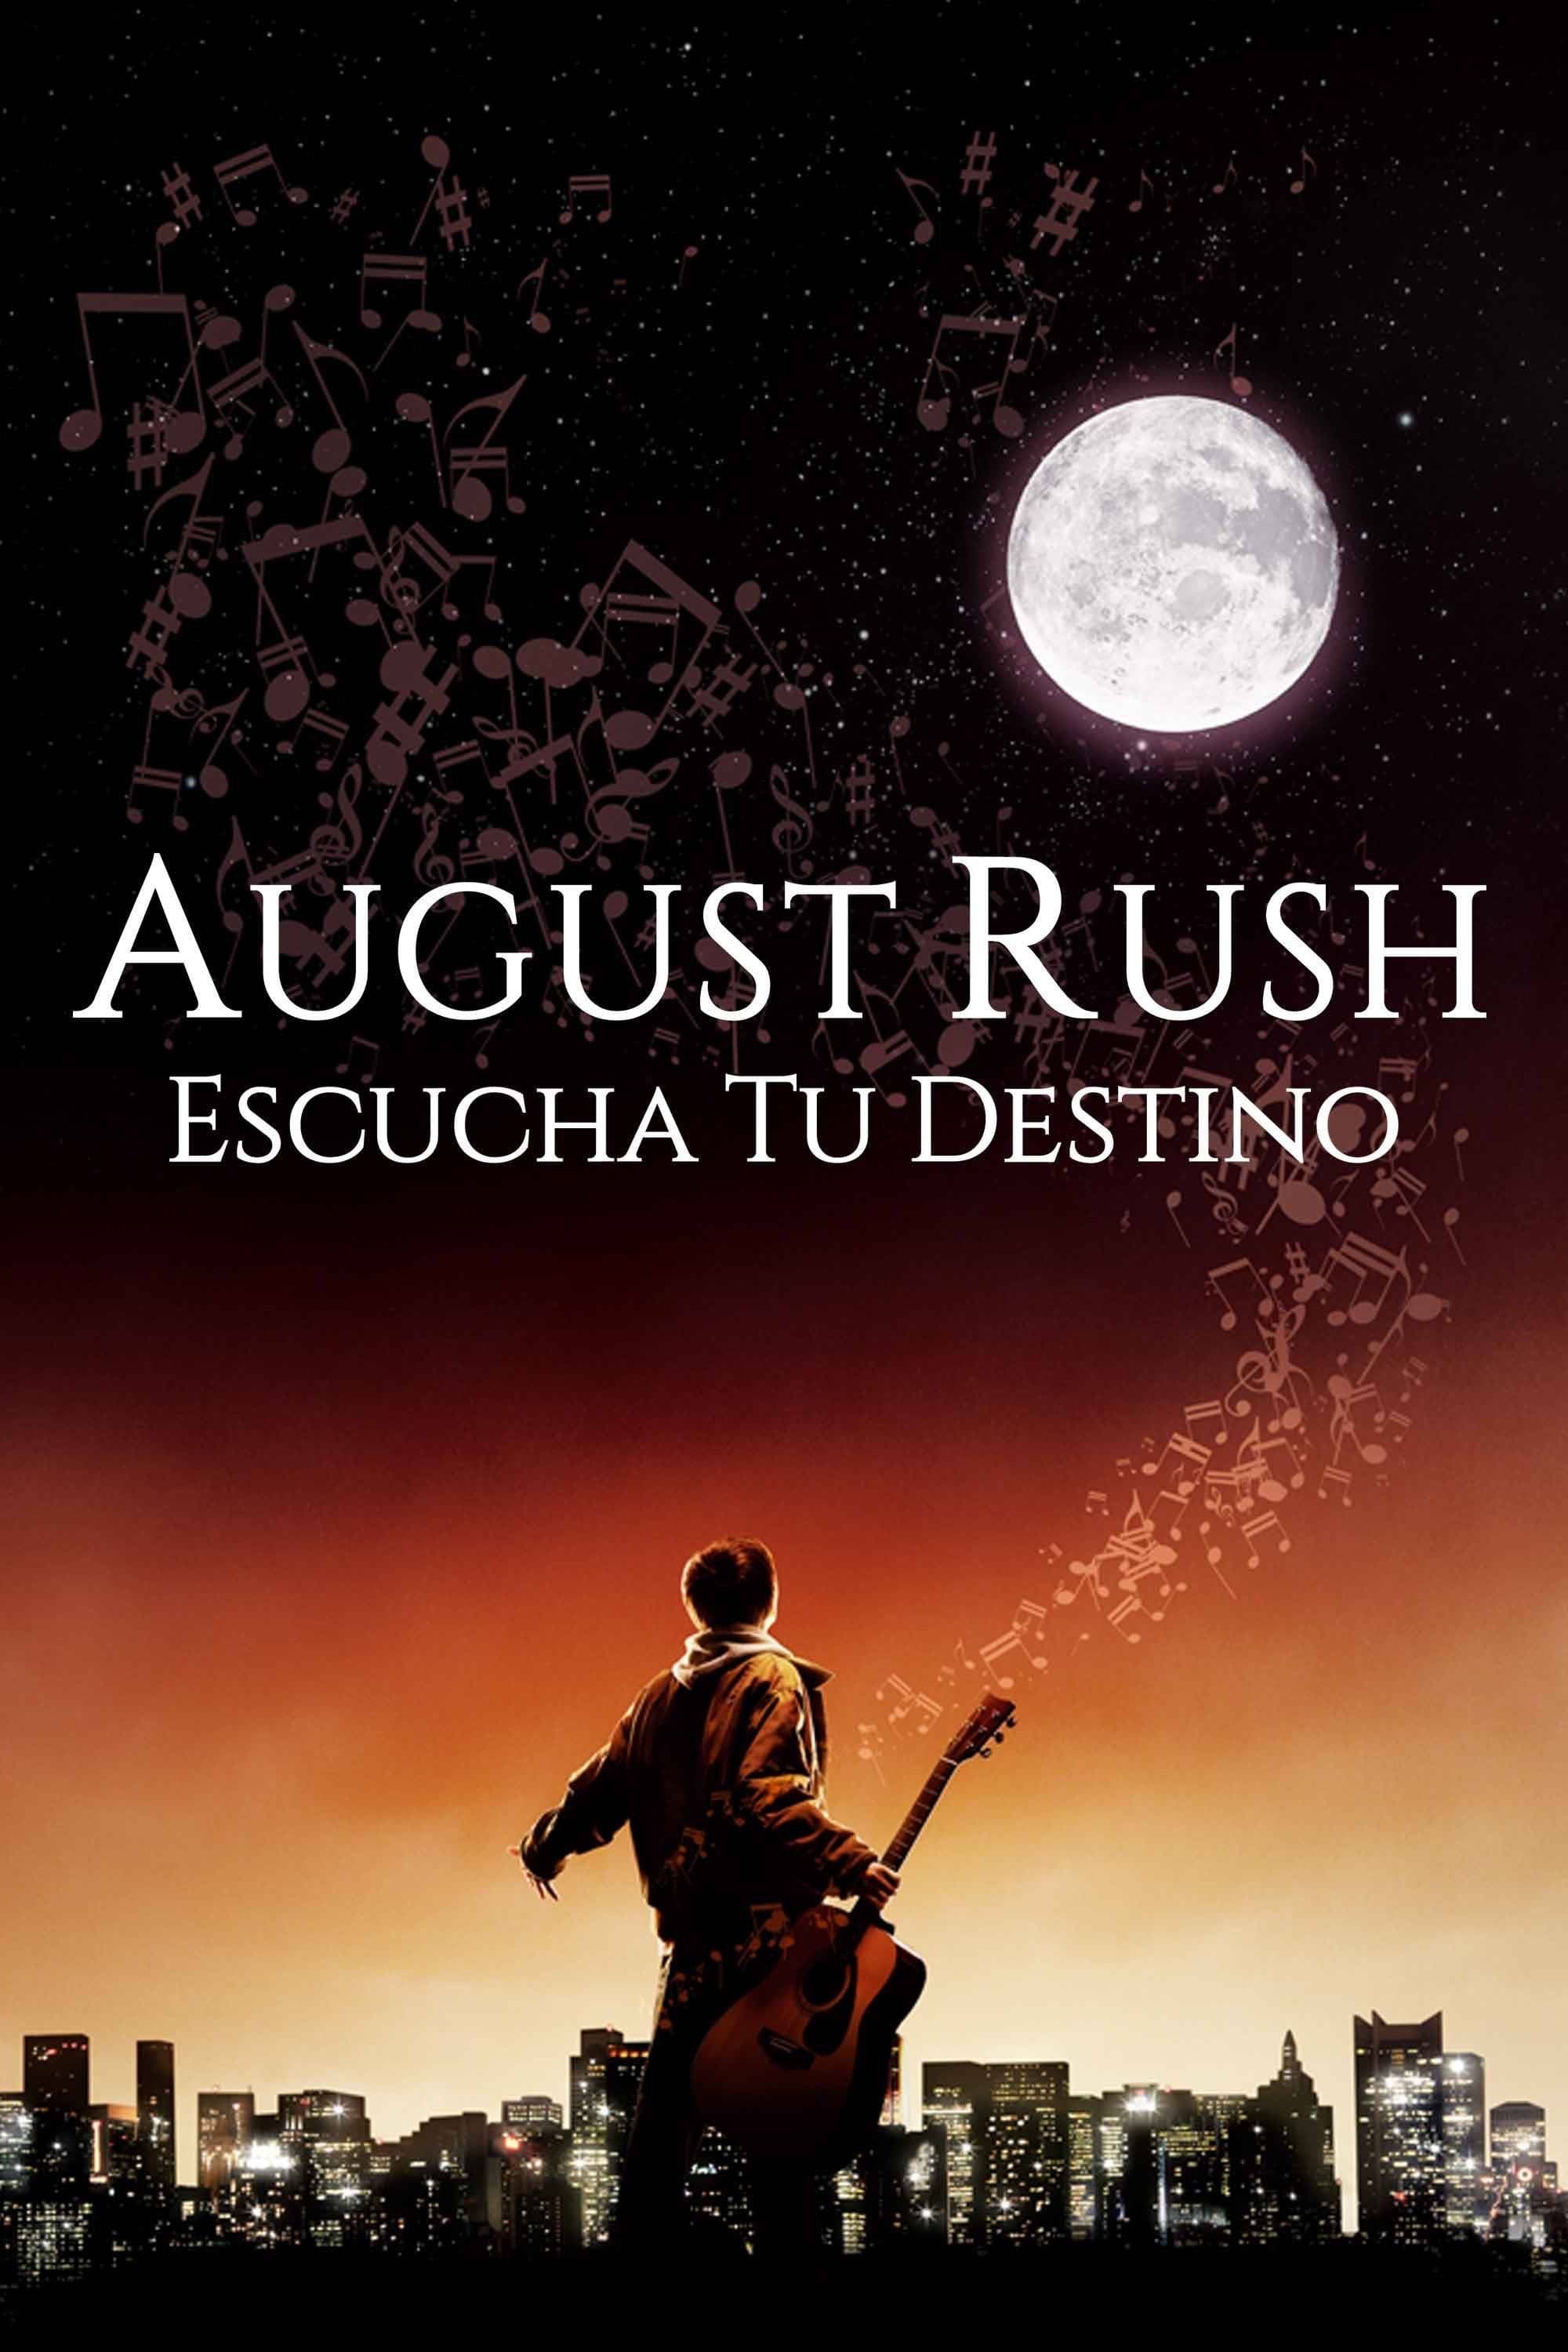 August Rush Escucha Tu Destino